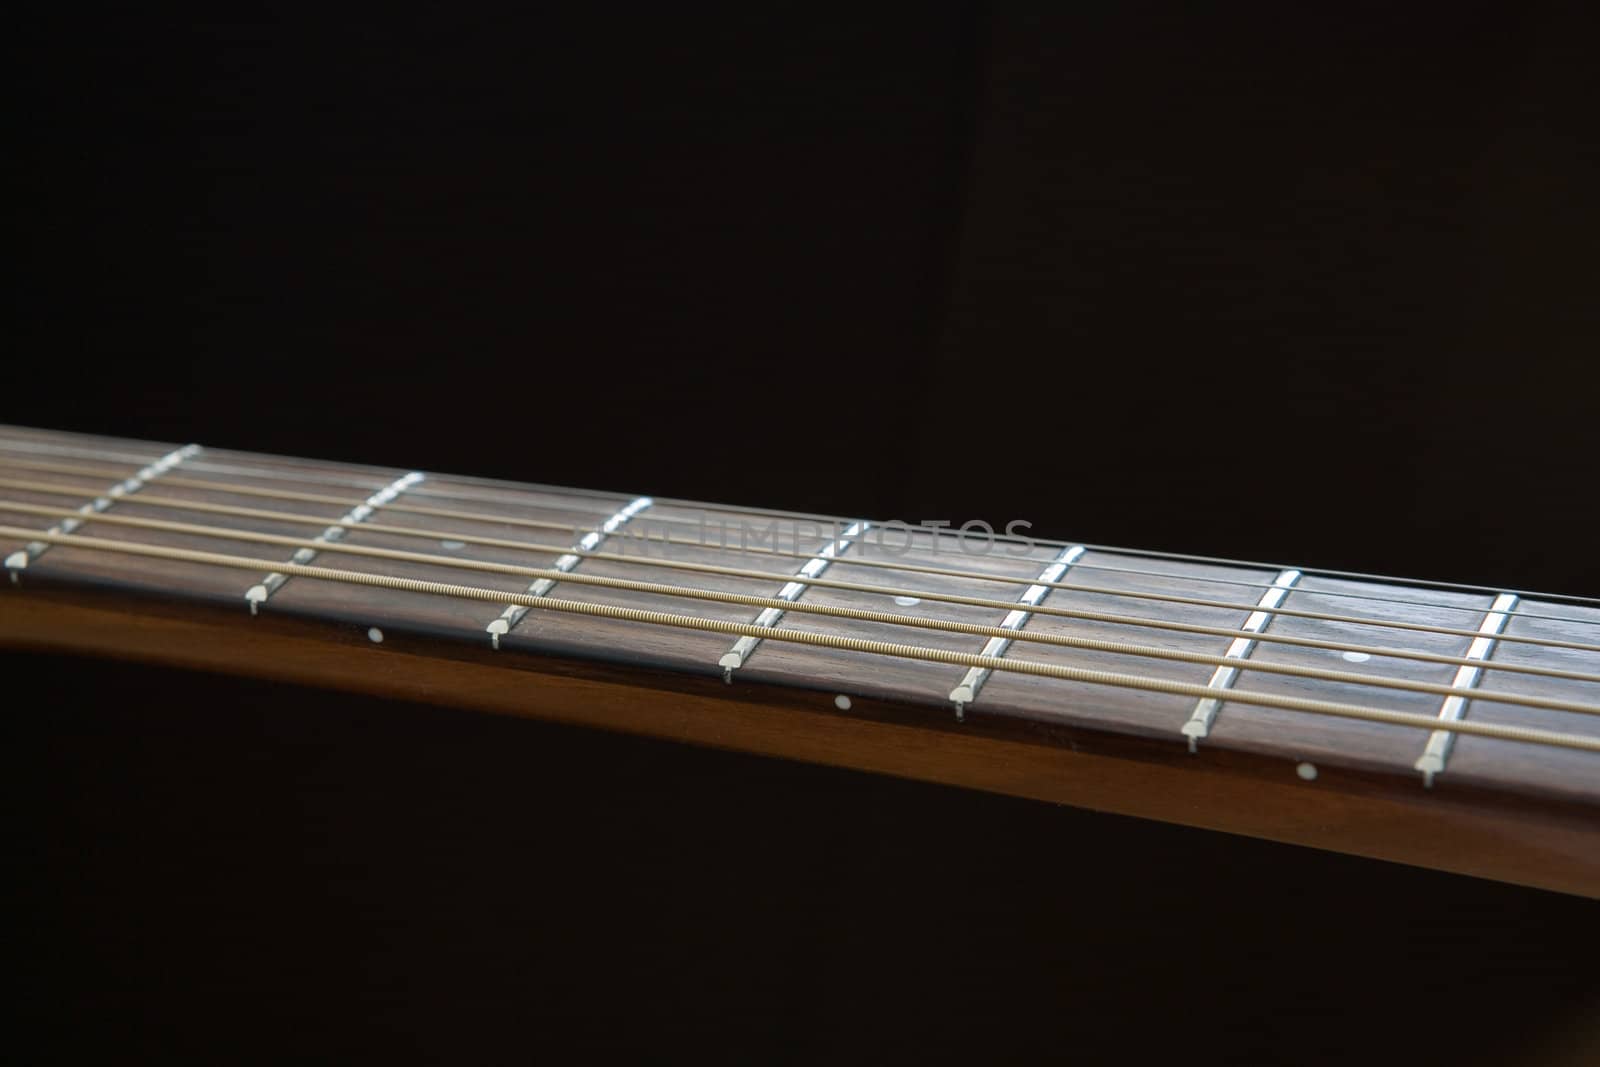 Acoustic guitar neck over dark background